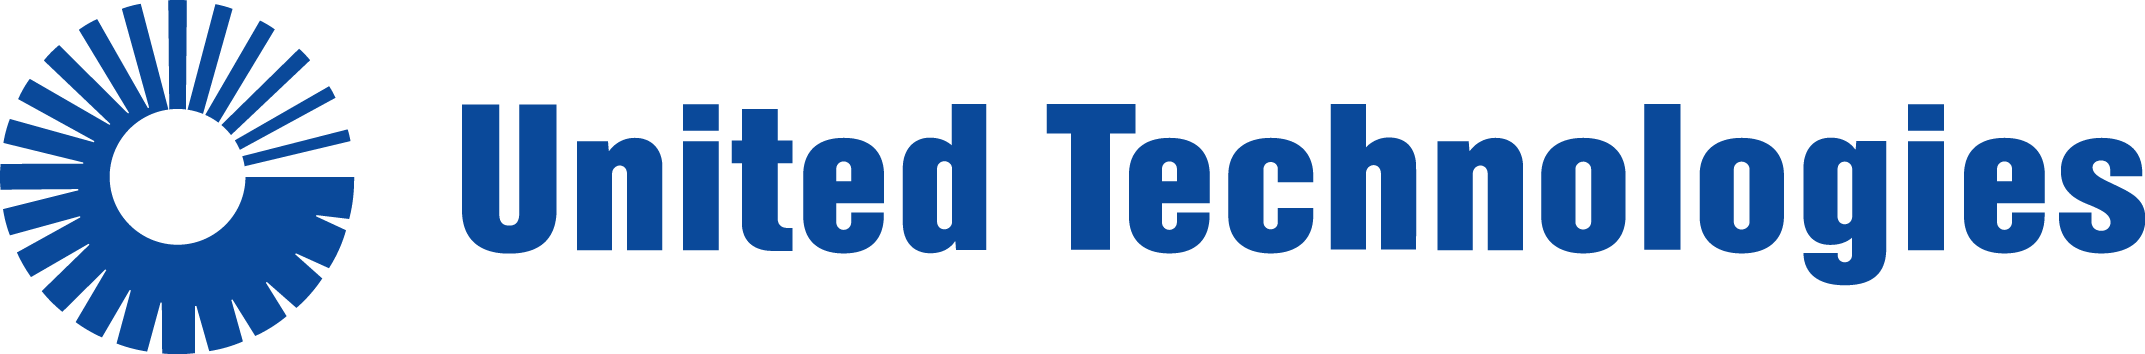 United Technologies Logo - United Technologies Corporation – MSU Supply Chain Management ...